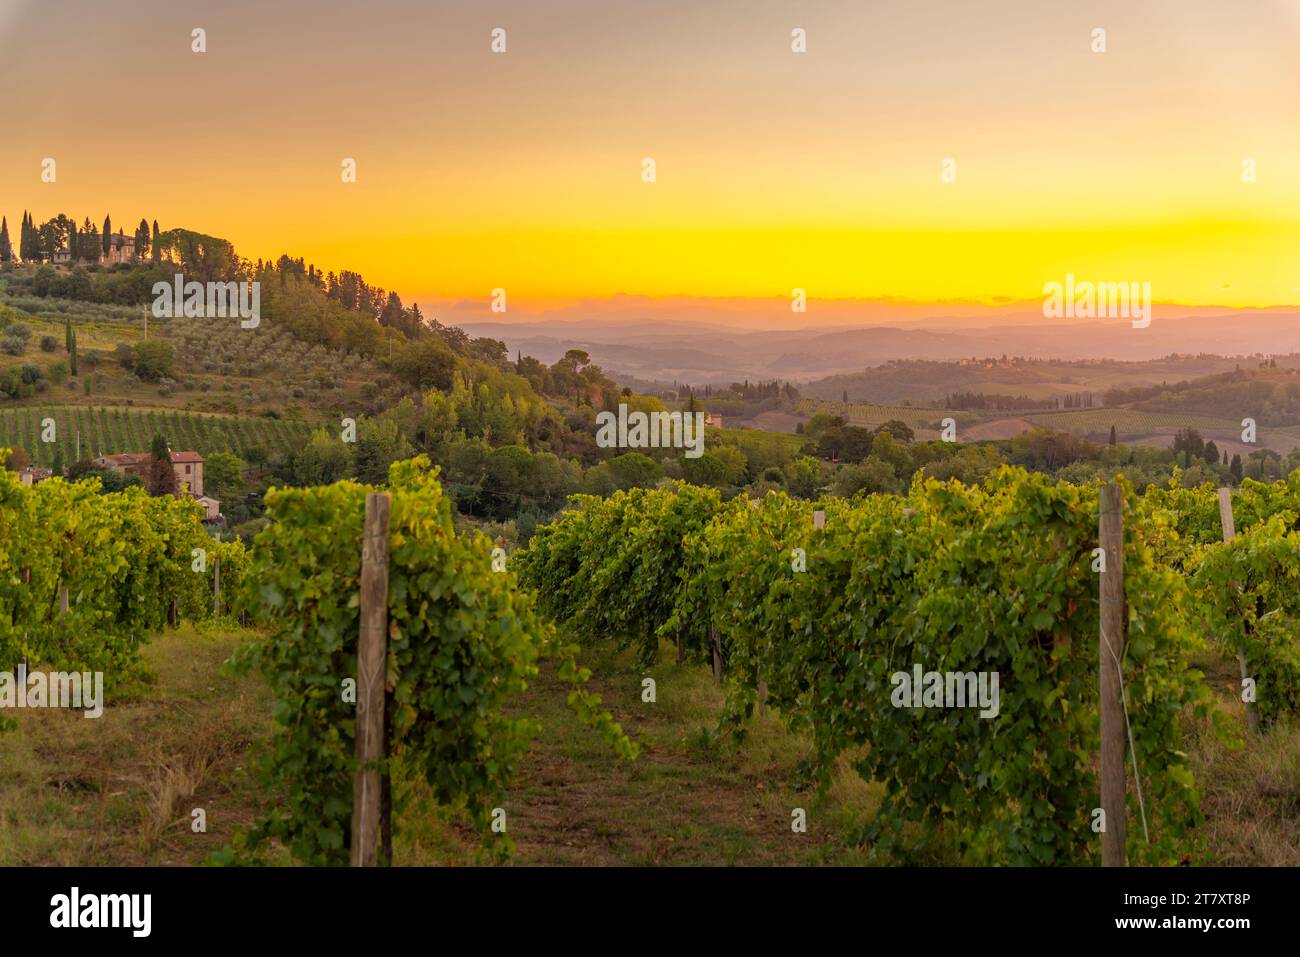 View of vineyards and landscape at sunrise near San Gimignano, San Gimignano, Province of Siena, Tuscany, Italy, Europe Stock Photo